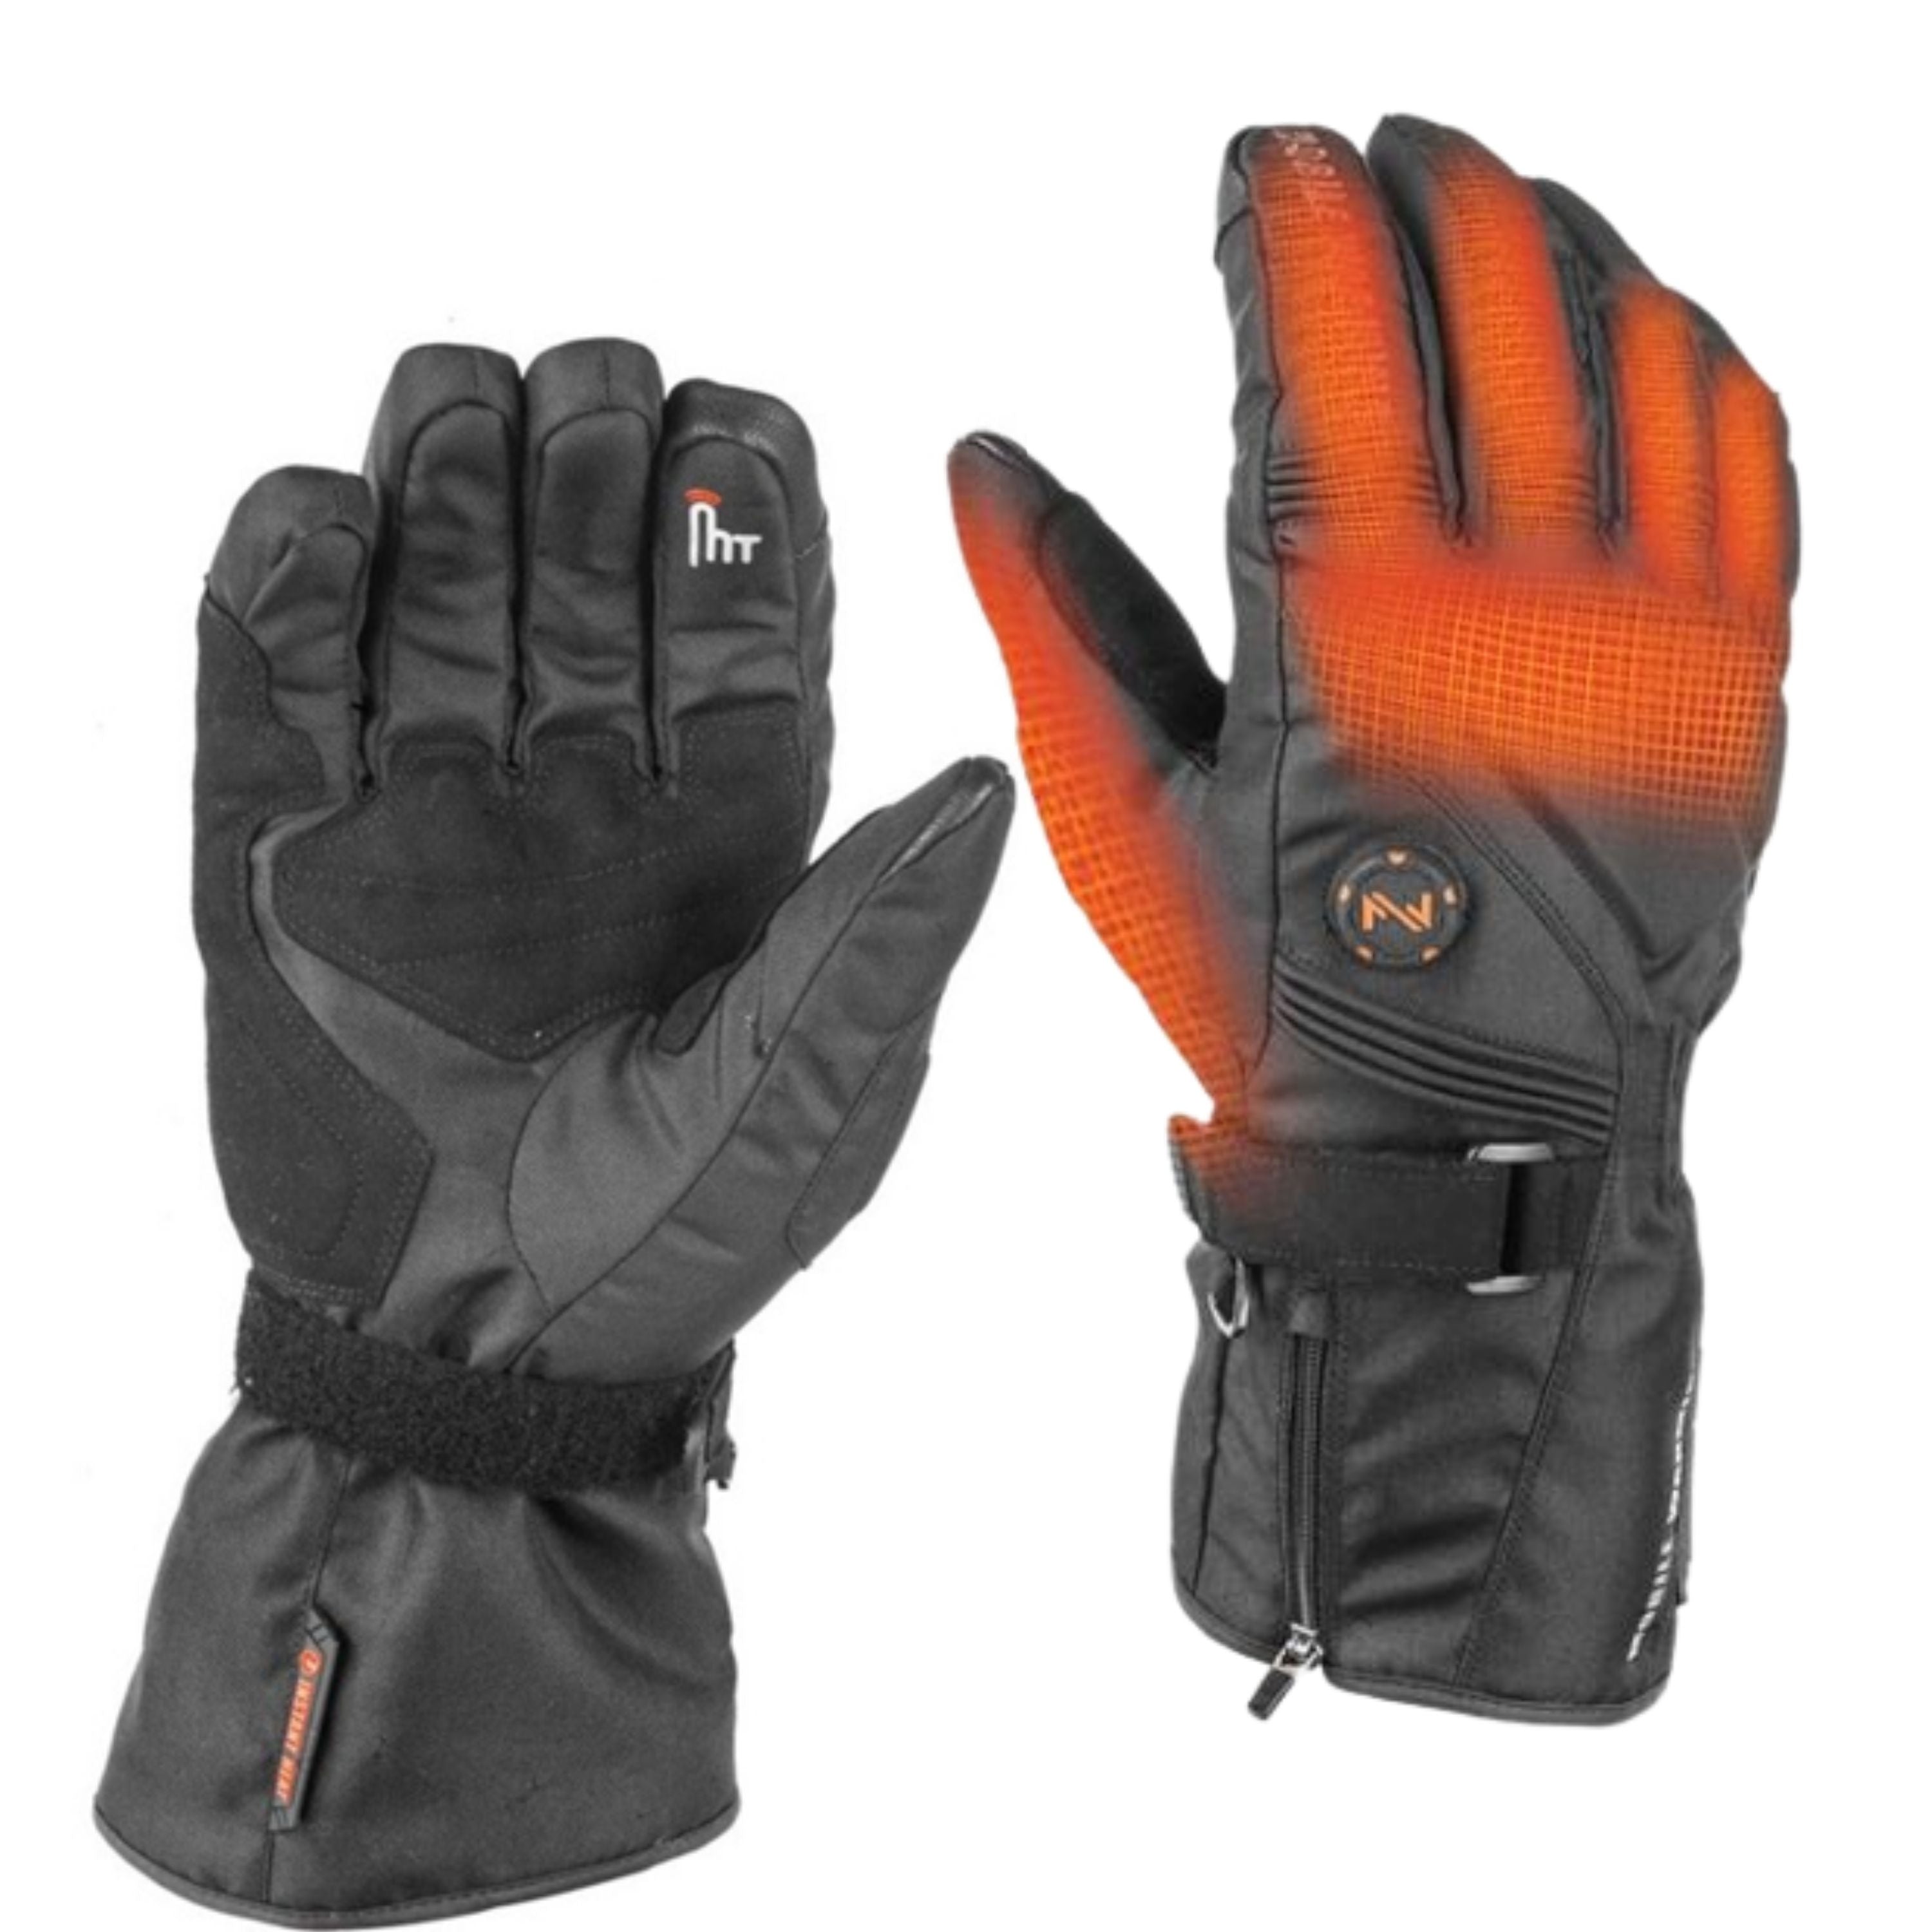 Gants chauffants Storm - Unisexe||Storm heated gloves - Unisex